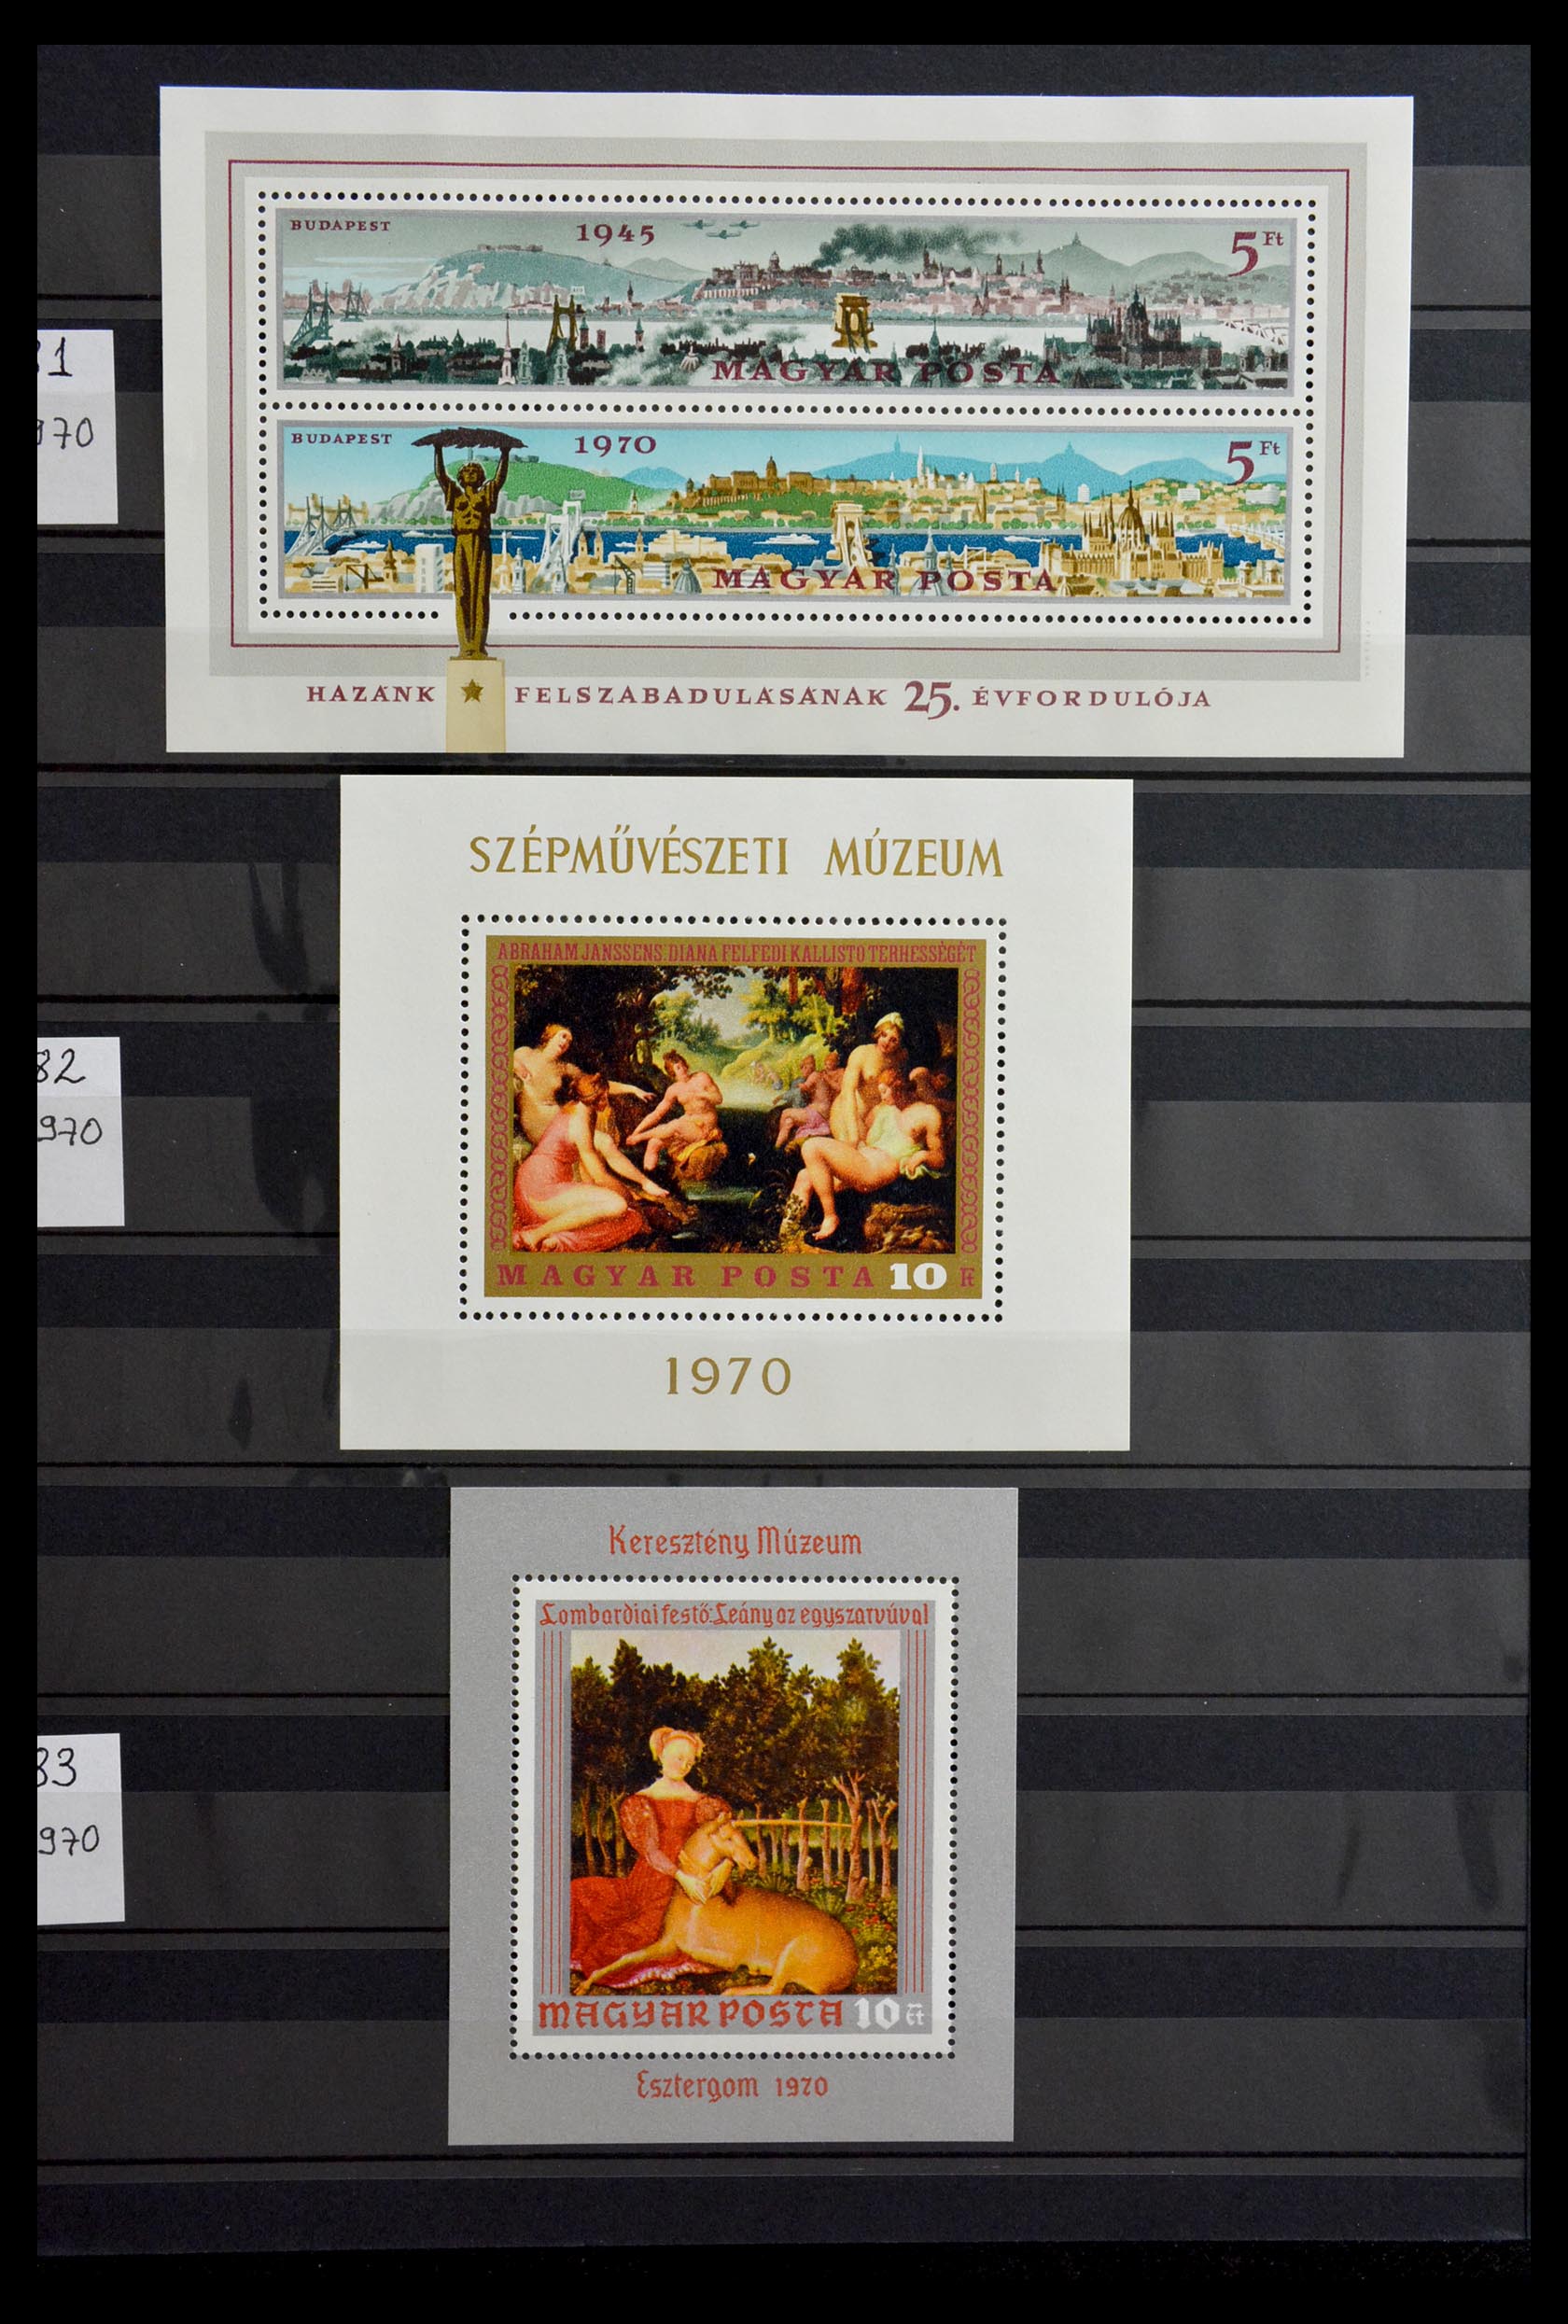 29283 034 - 29283 Hungary souvenir sheets 1938-1984.